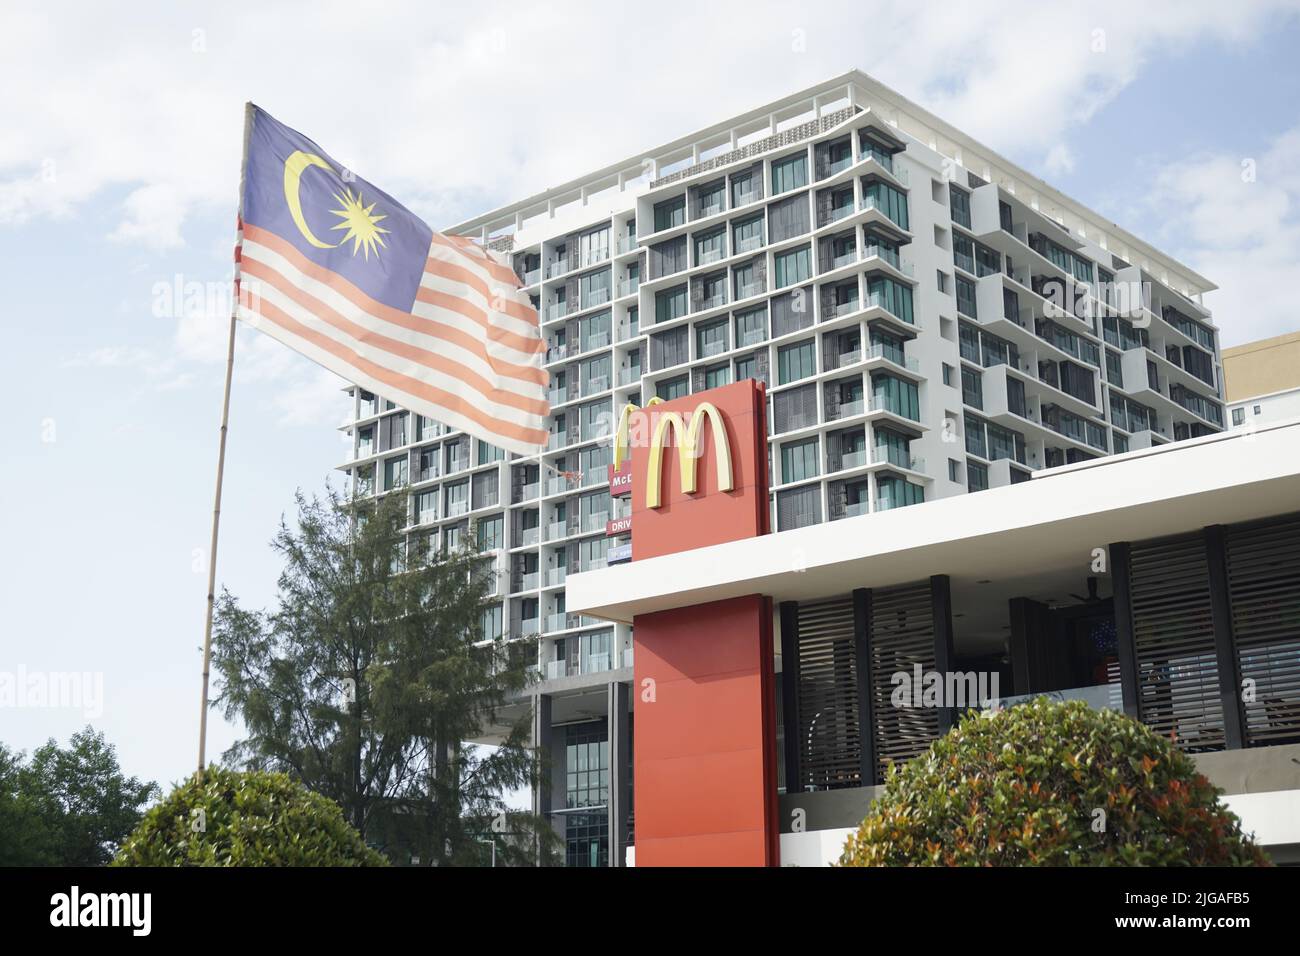 McDonalds Fast Food Restaurant in Malaysia Stockfoto